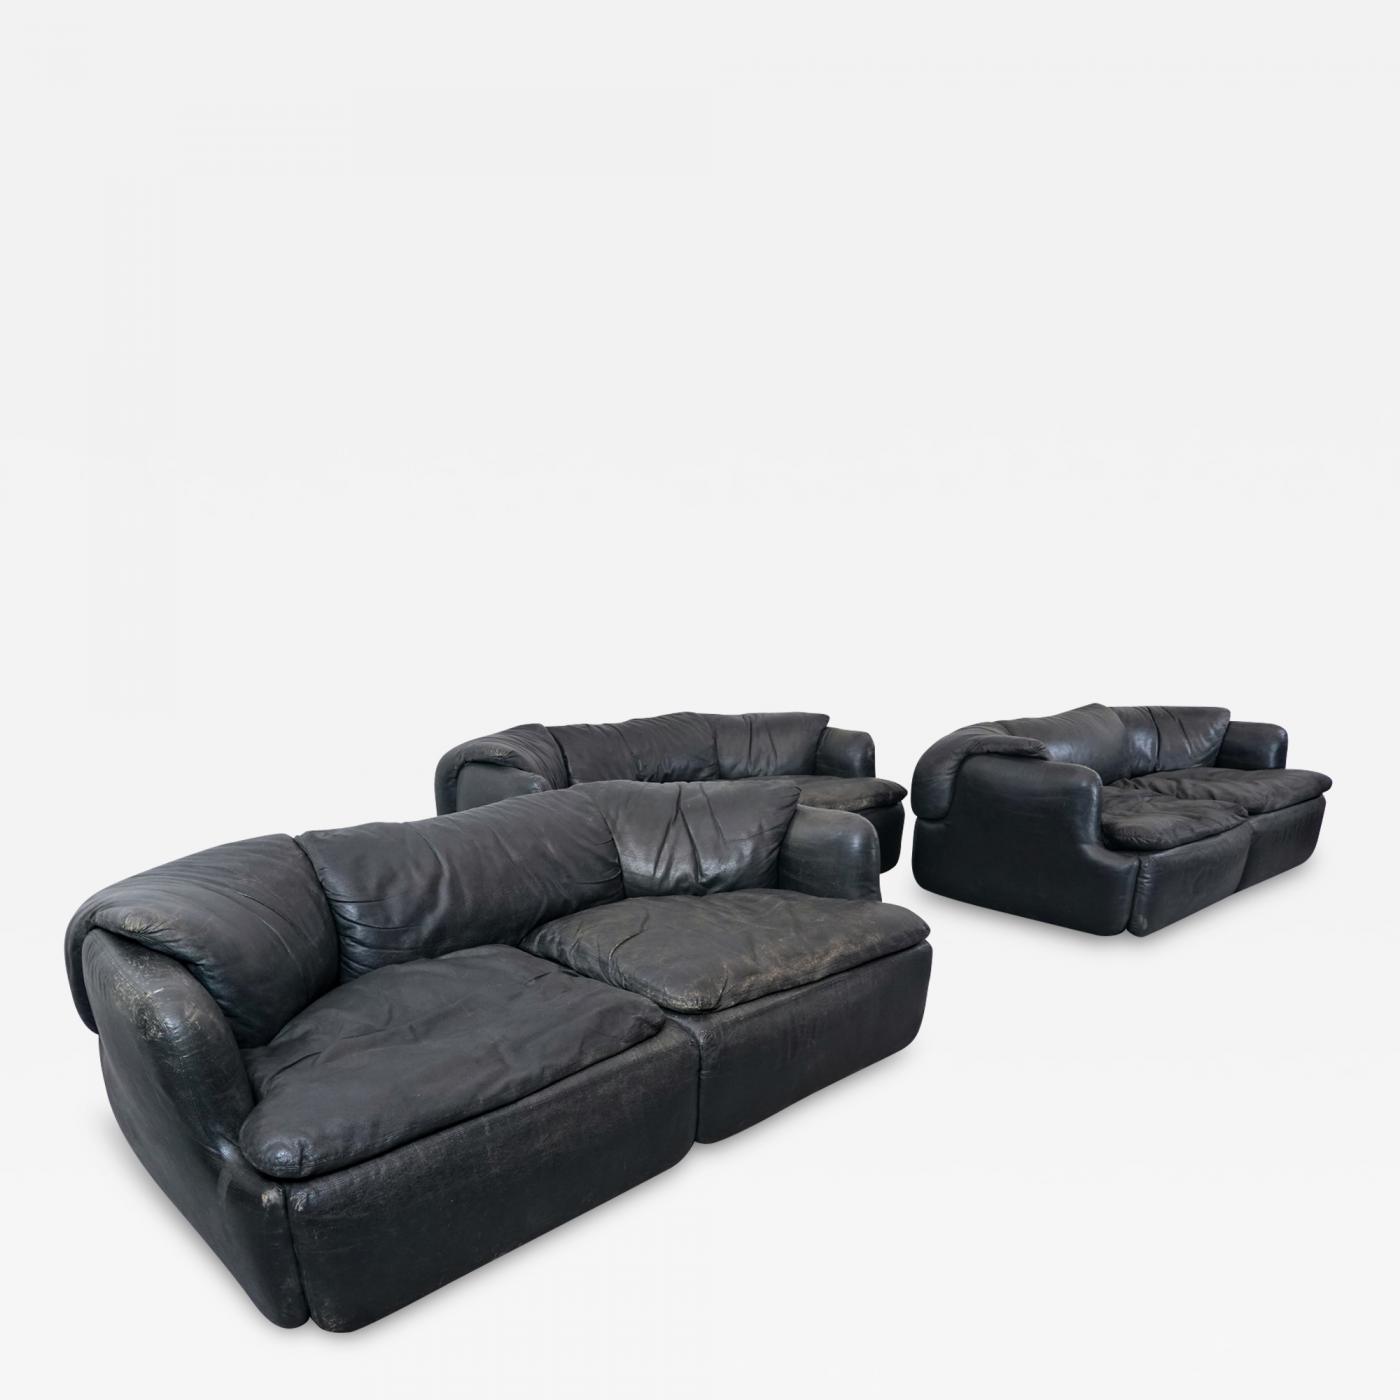 Alberto Roselli for Saporiti Confidential Mid Century Italian Leather Sofa, Mid Century Modern Furniture